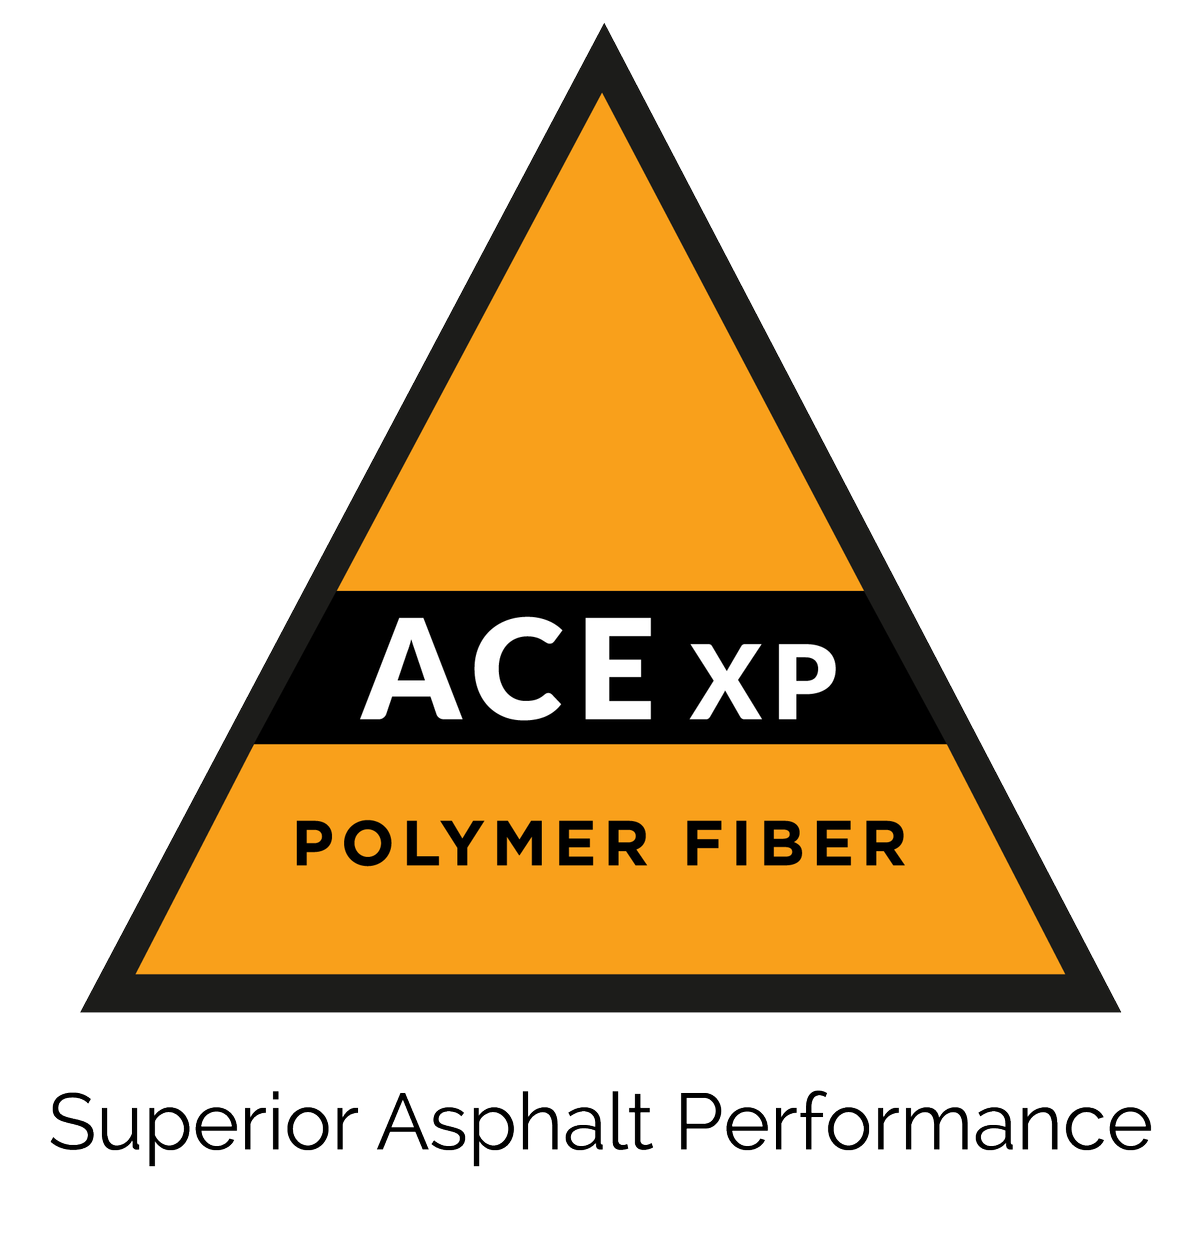 ACE XP Polymer Fiber, Superior Asphalt Performance logo